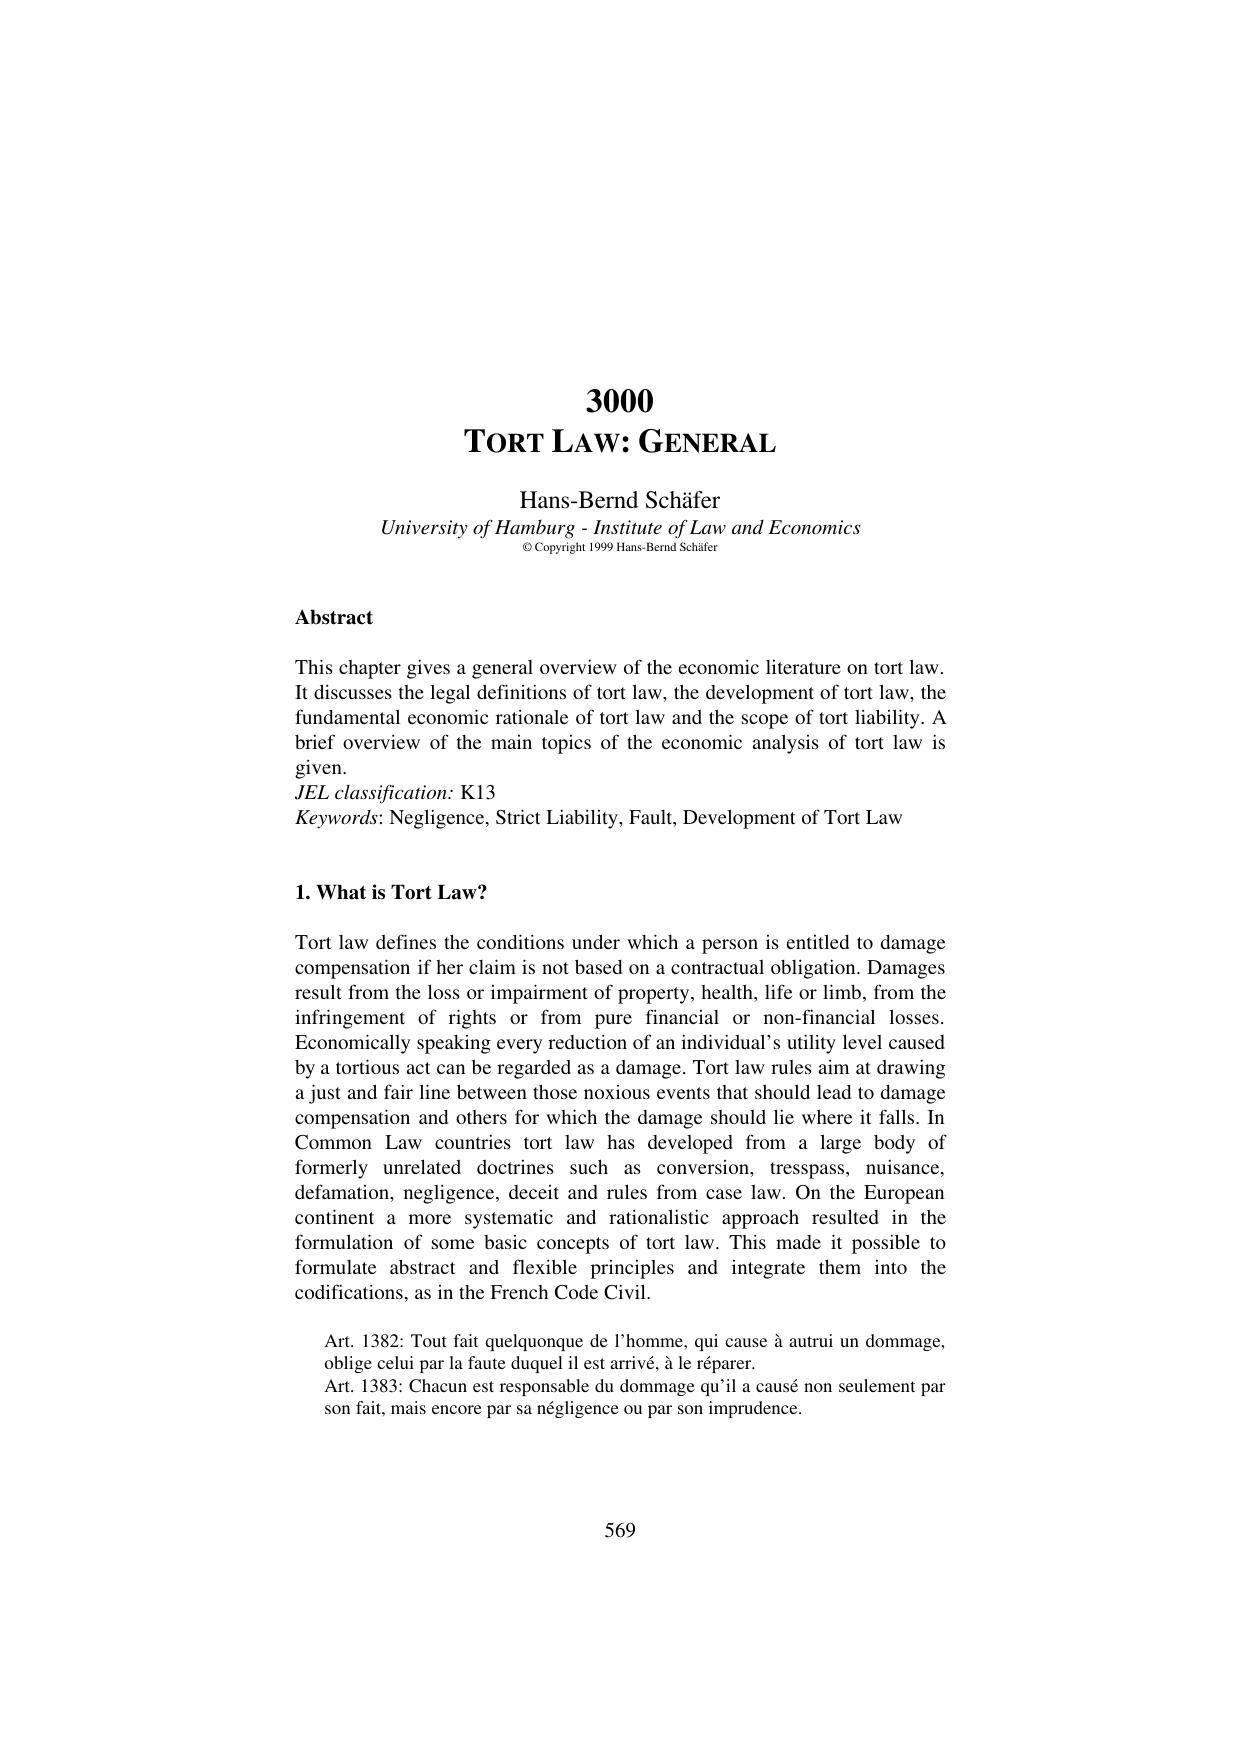 Economics of Public and Tax Law (Encyclopedia of Law and Economics , Vol 4)